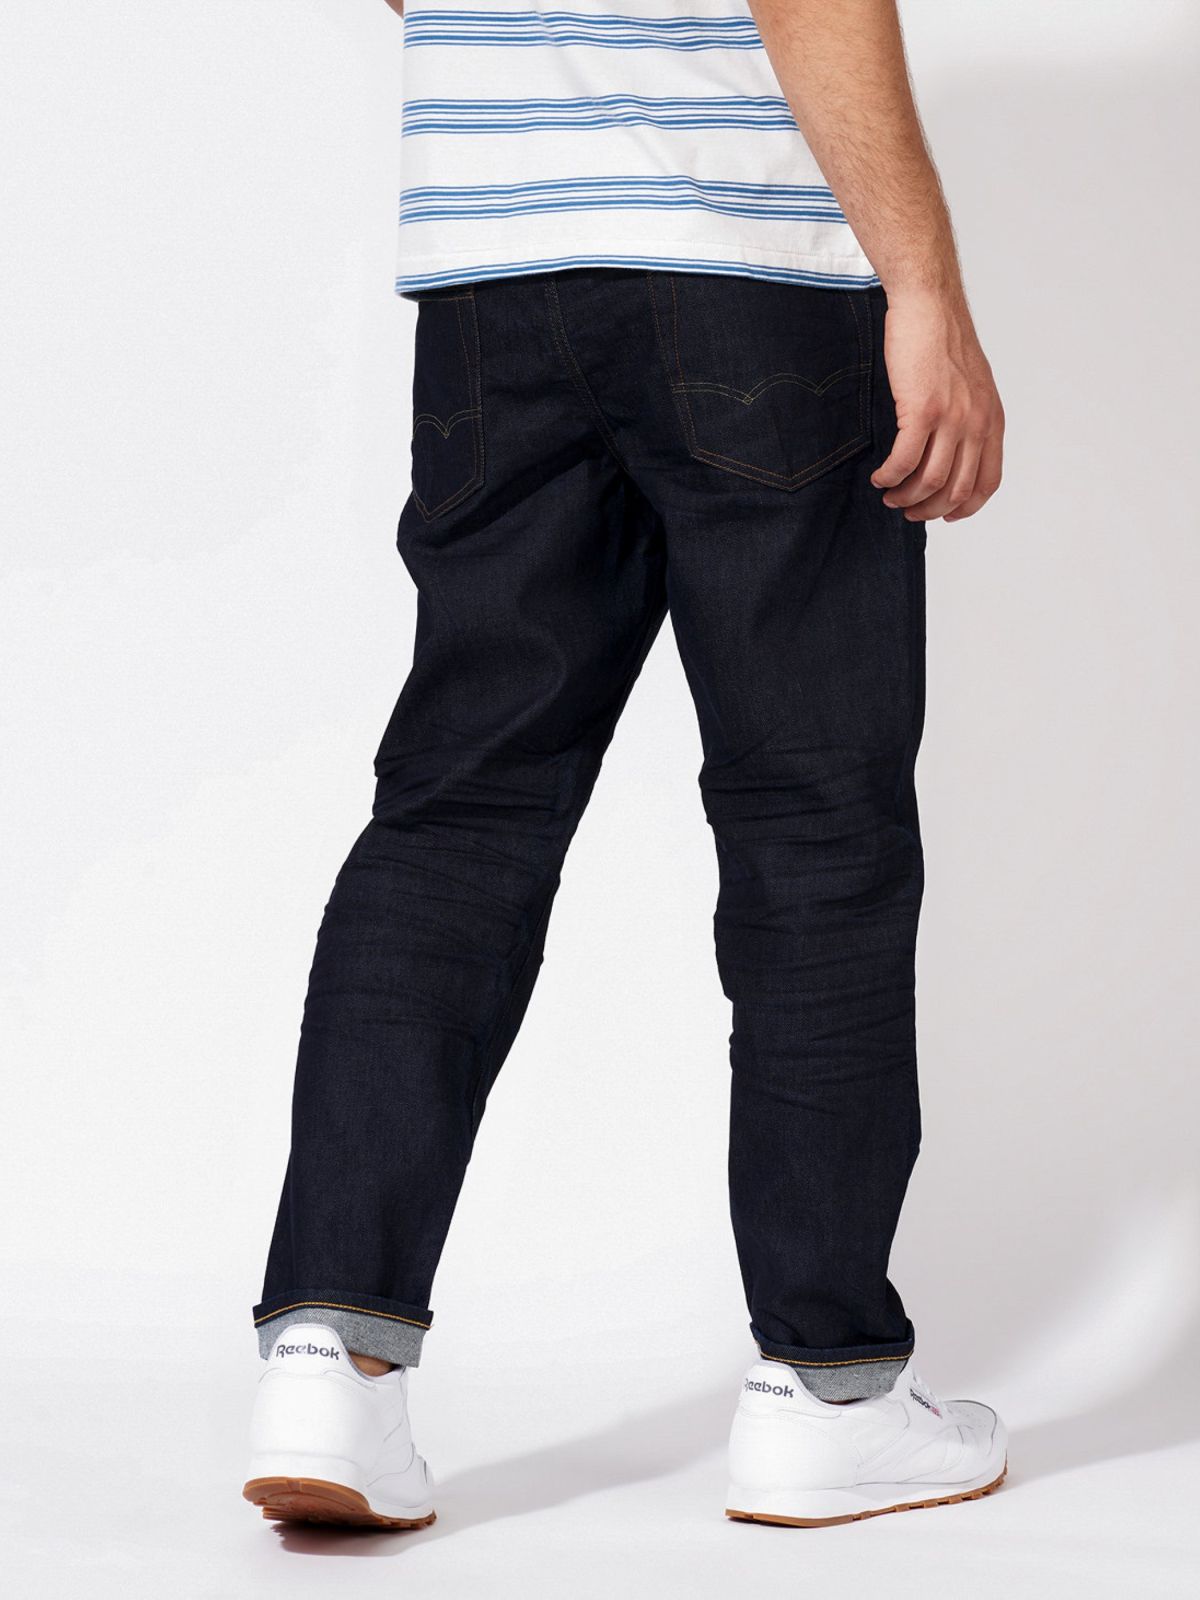  מכנסי ג'ינס LOOSE CROPPED של AMERICAN EAGLE